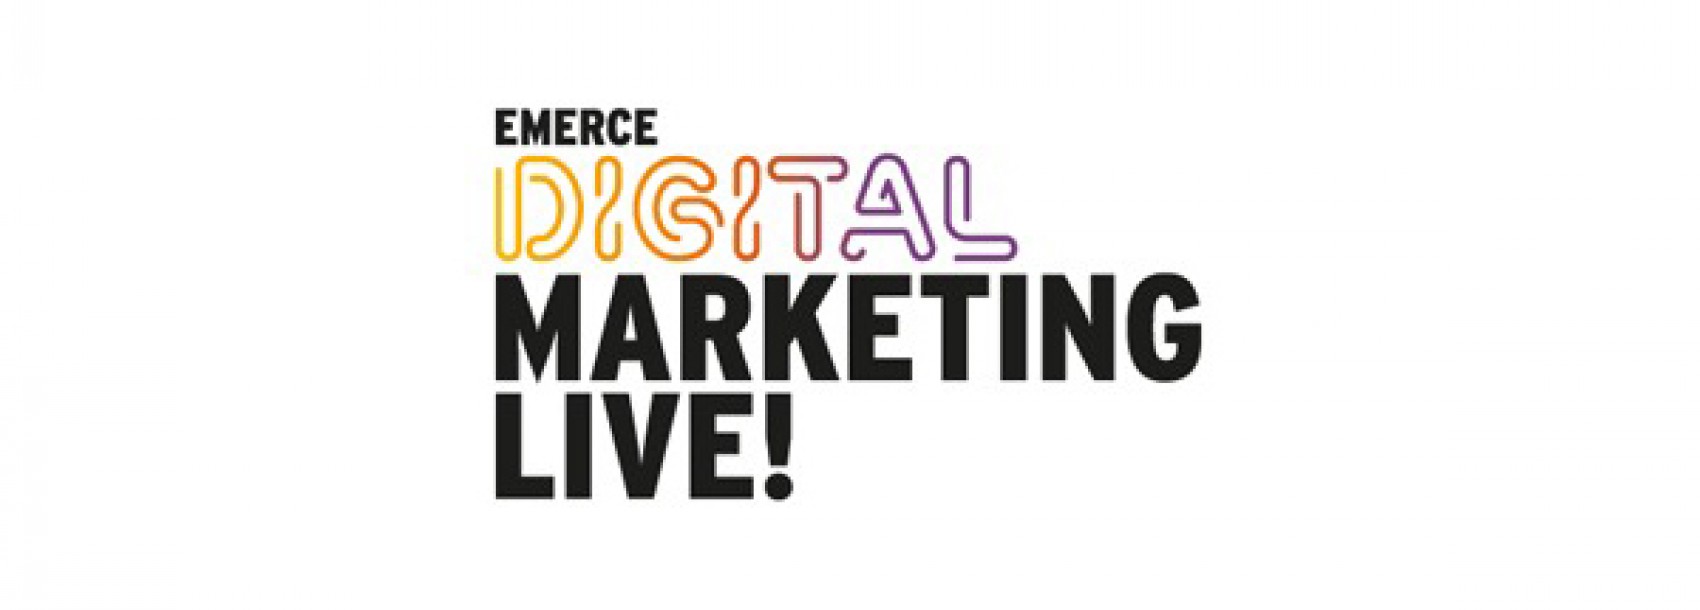 Emerce Digital marketing live